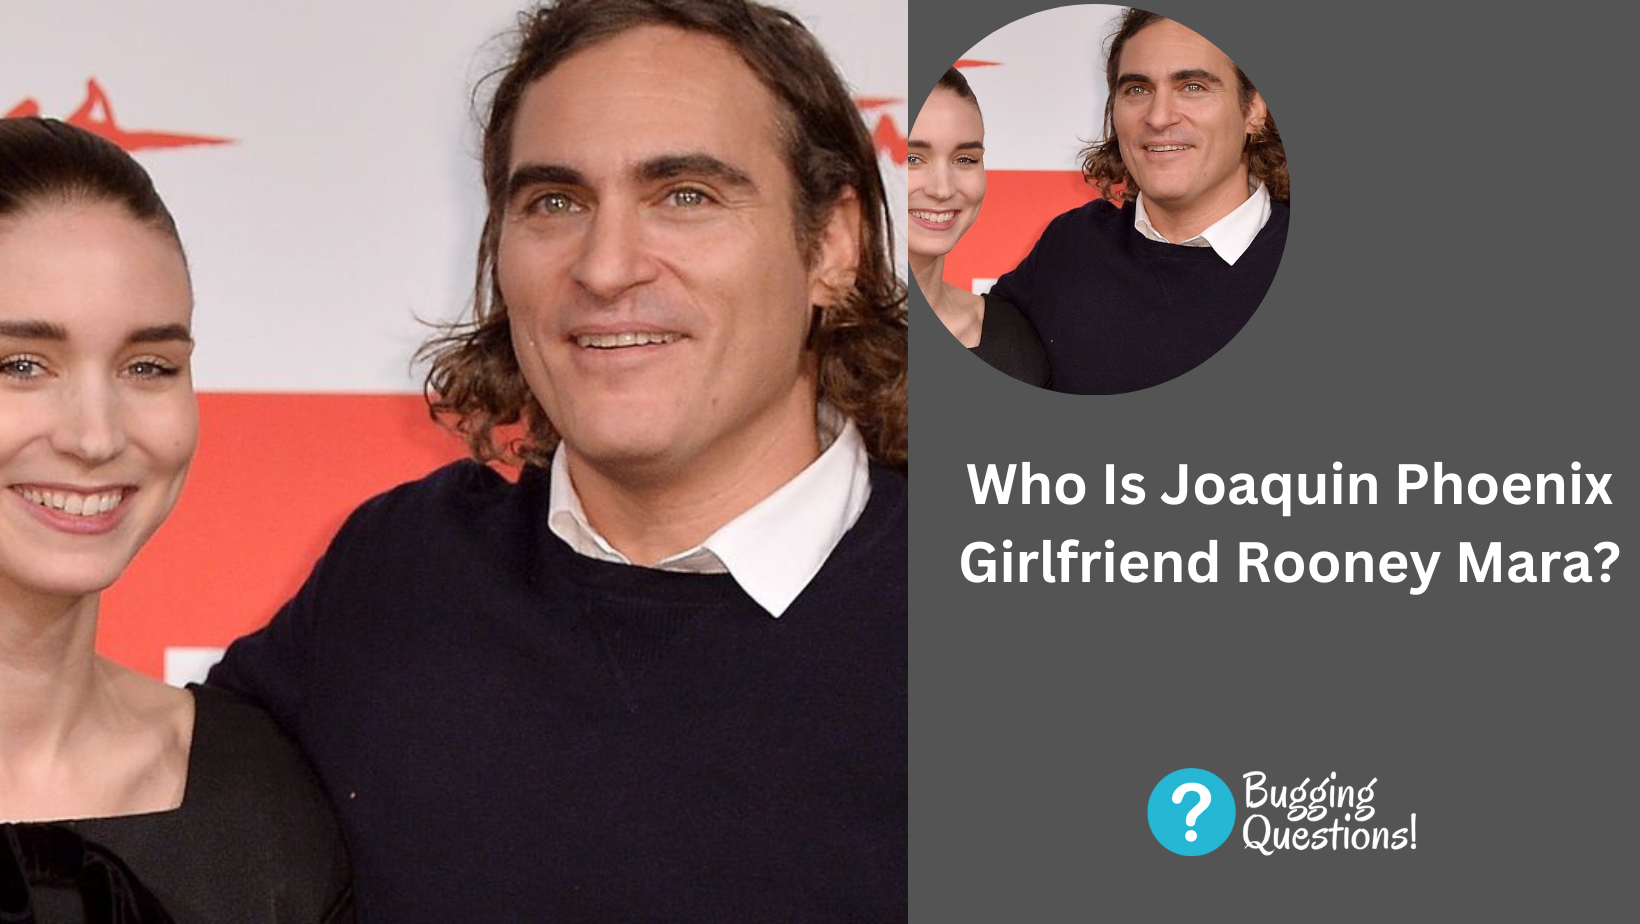 Who Is Joaquin Phoenix Girlfriend Rooney Mara?